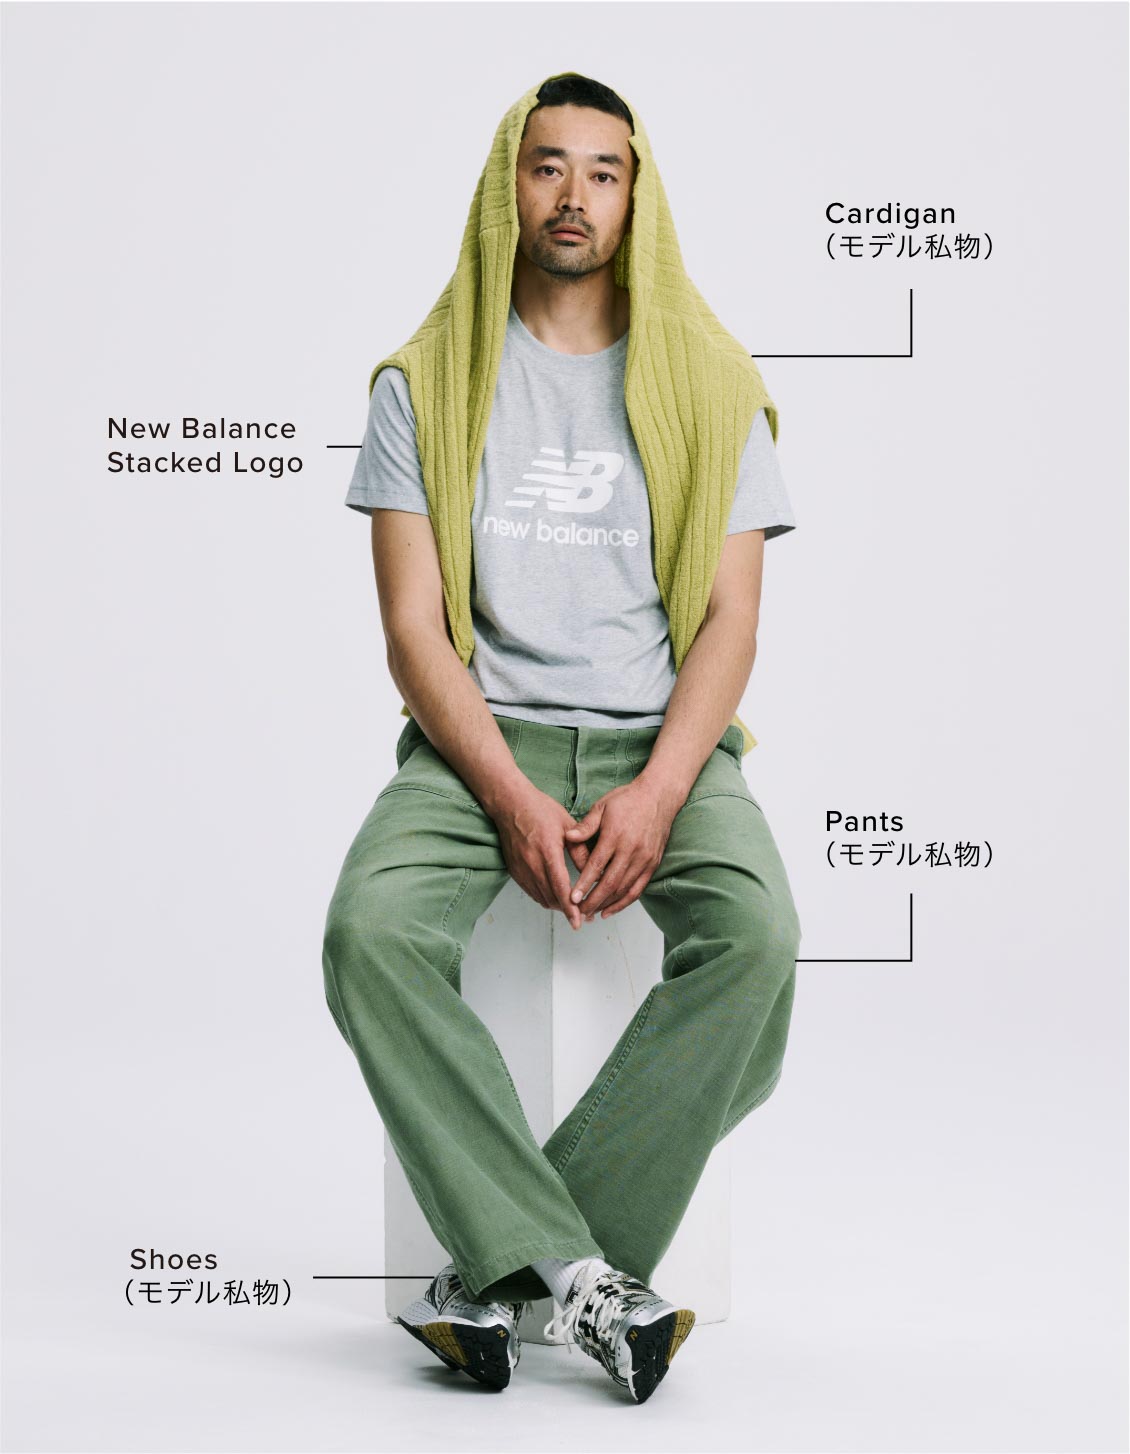 Yoichi Owashi搭配详情T恤:New Balance Stacked Logo, Cardigan:模特个人物品，Pants:模特个人物品，Shoes:模特个人物品